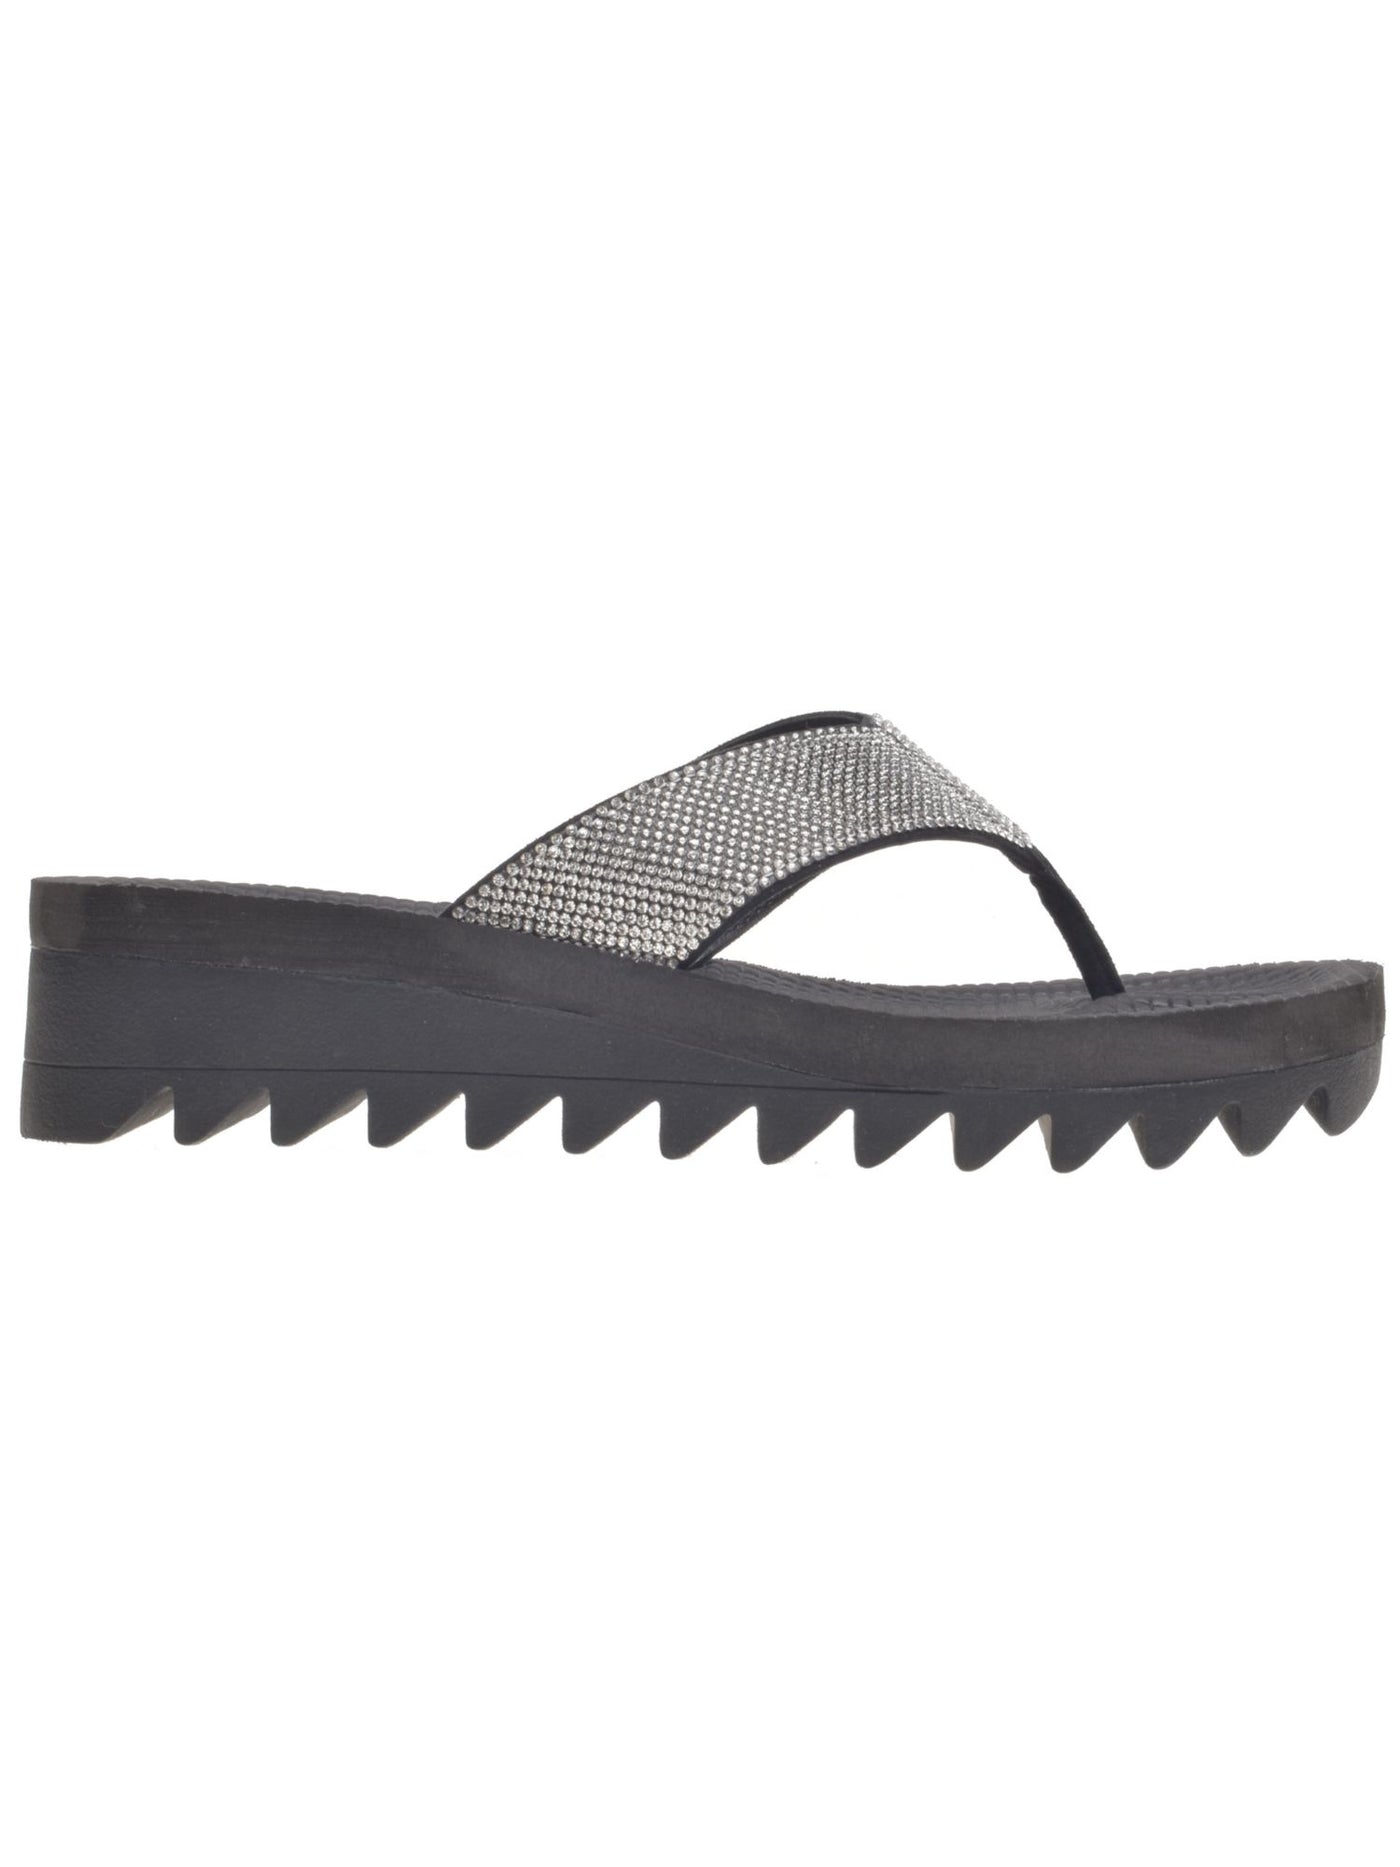 WILD PAIR Womens Black Saw Tooth Sole Rhinestone Kalabasas Round Toe Wedge Slip On Thong Sandals Shoes 7.5 M